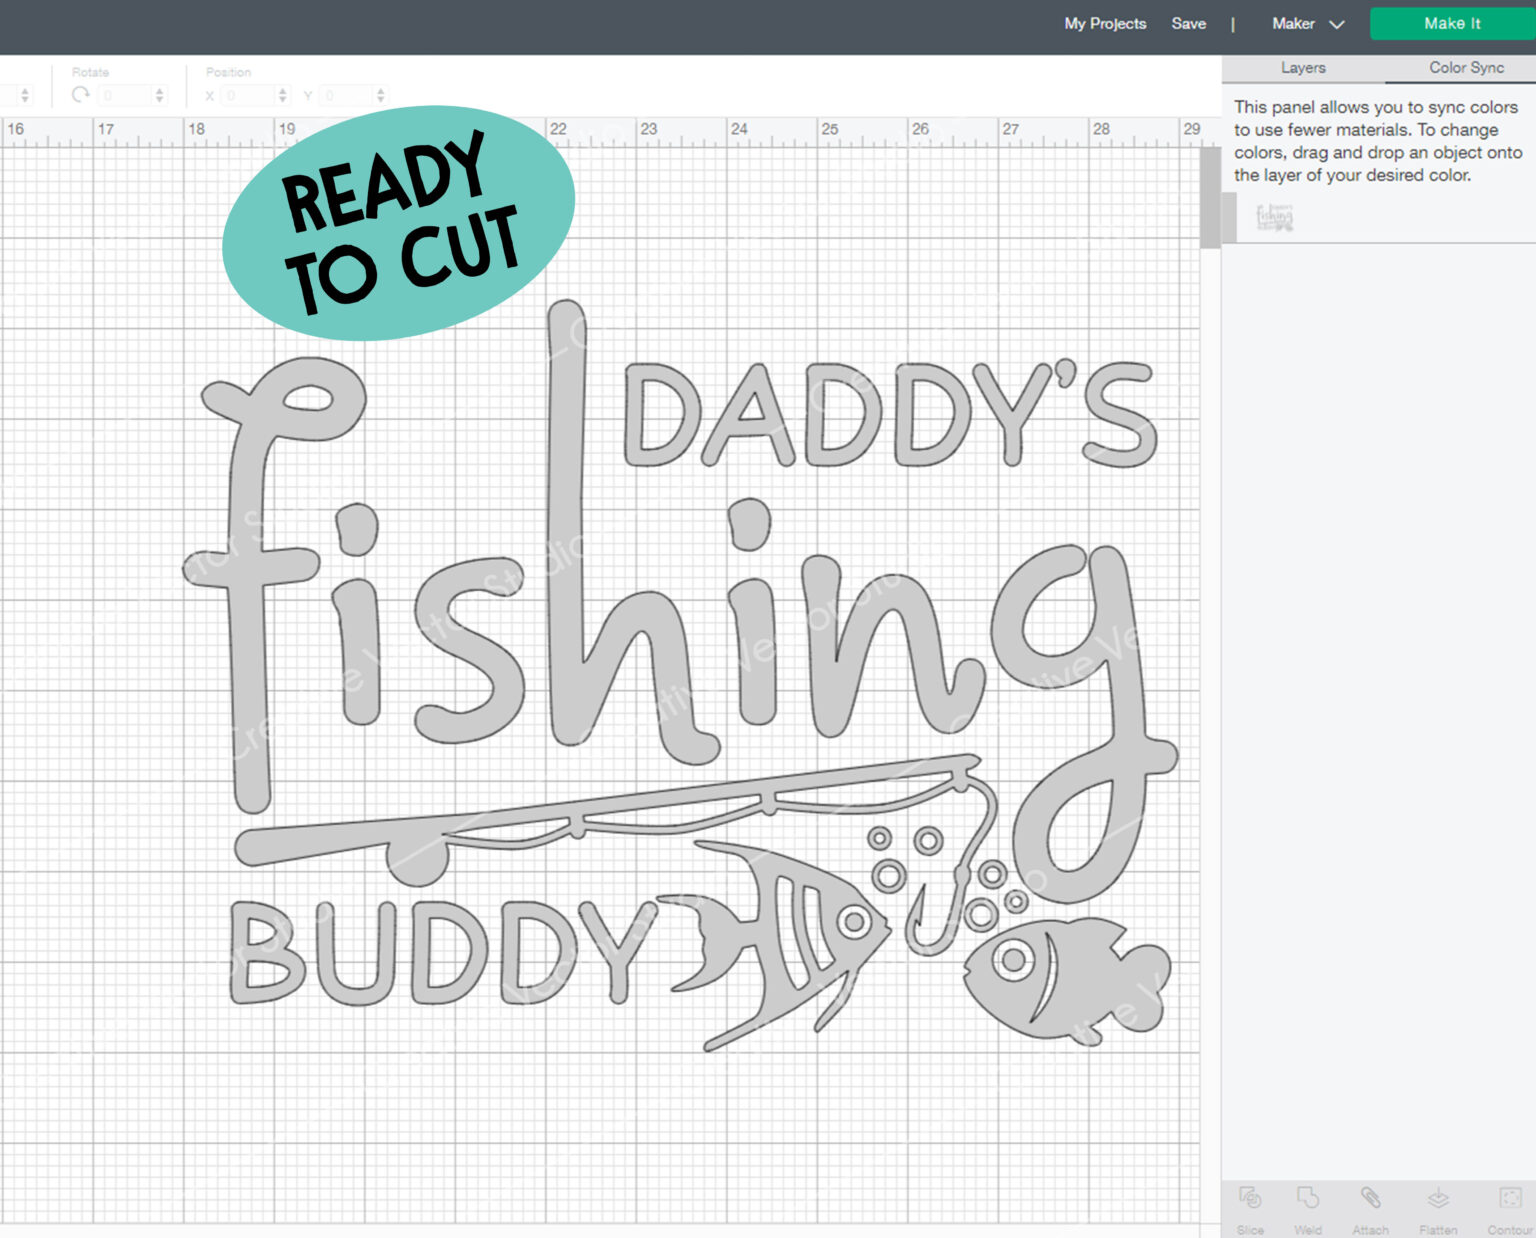 Download Daddy's Fishing Buddy SVG | Creative Vector Studio